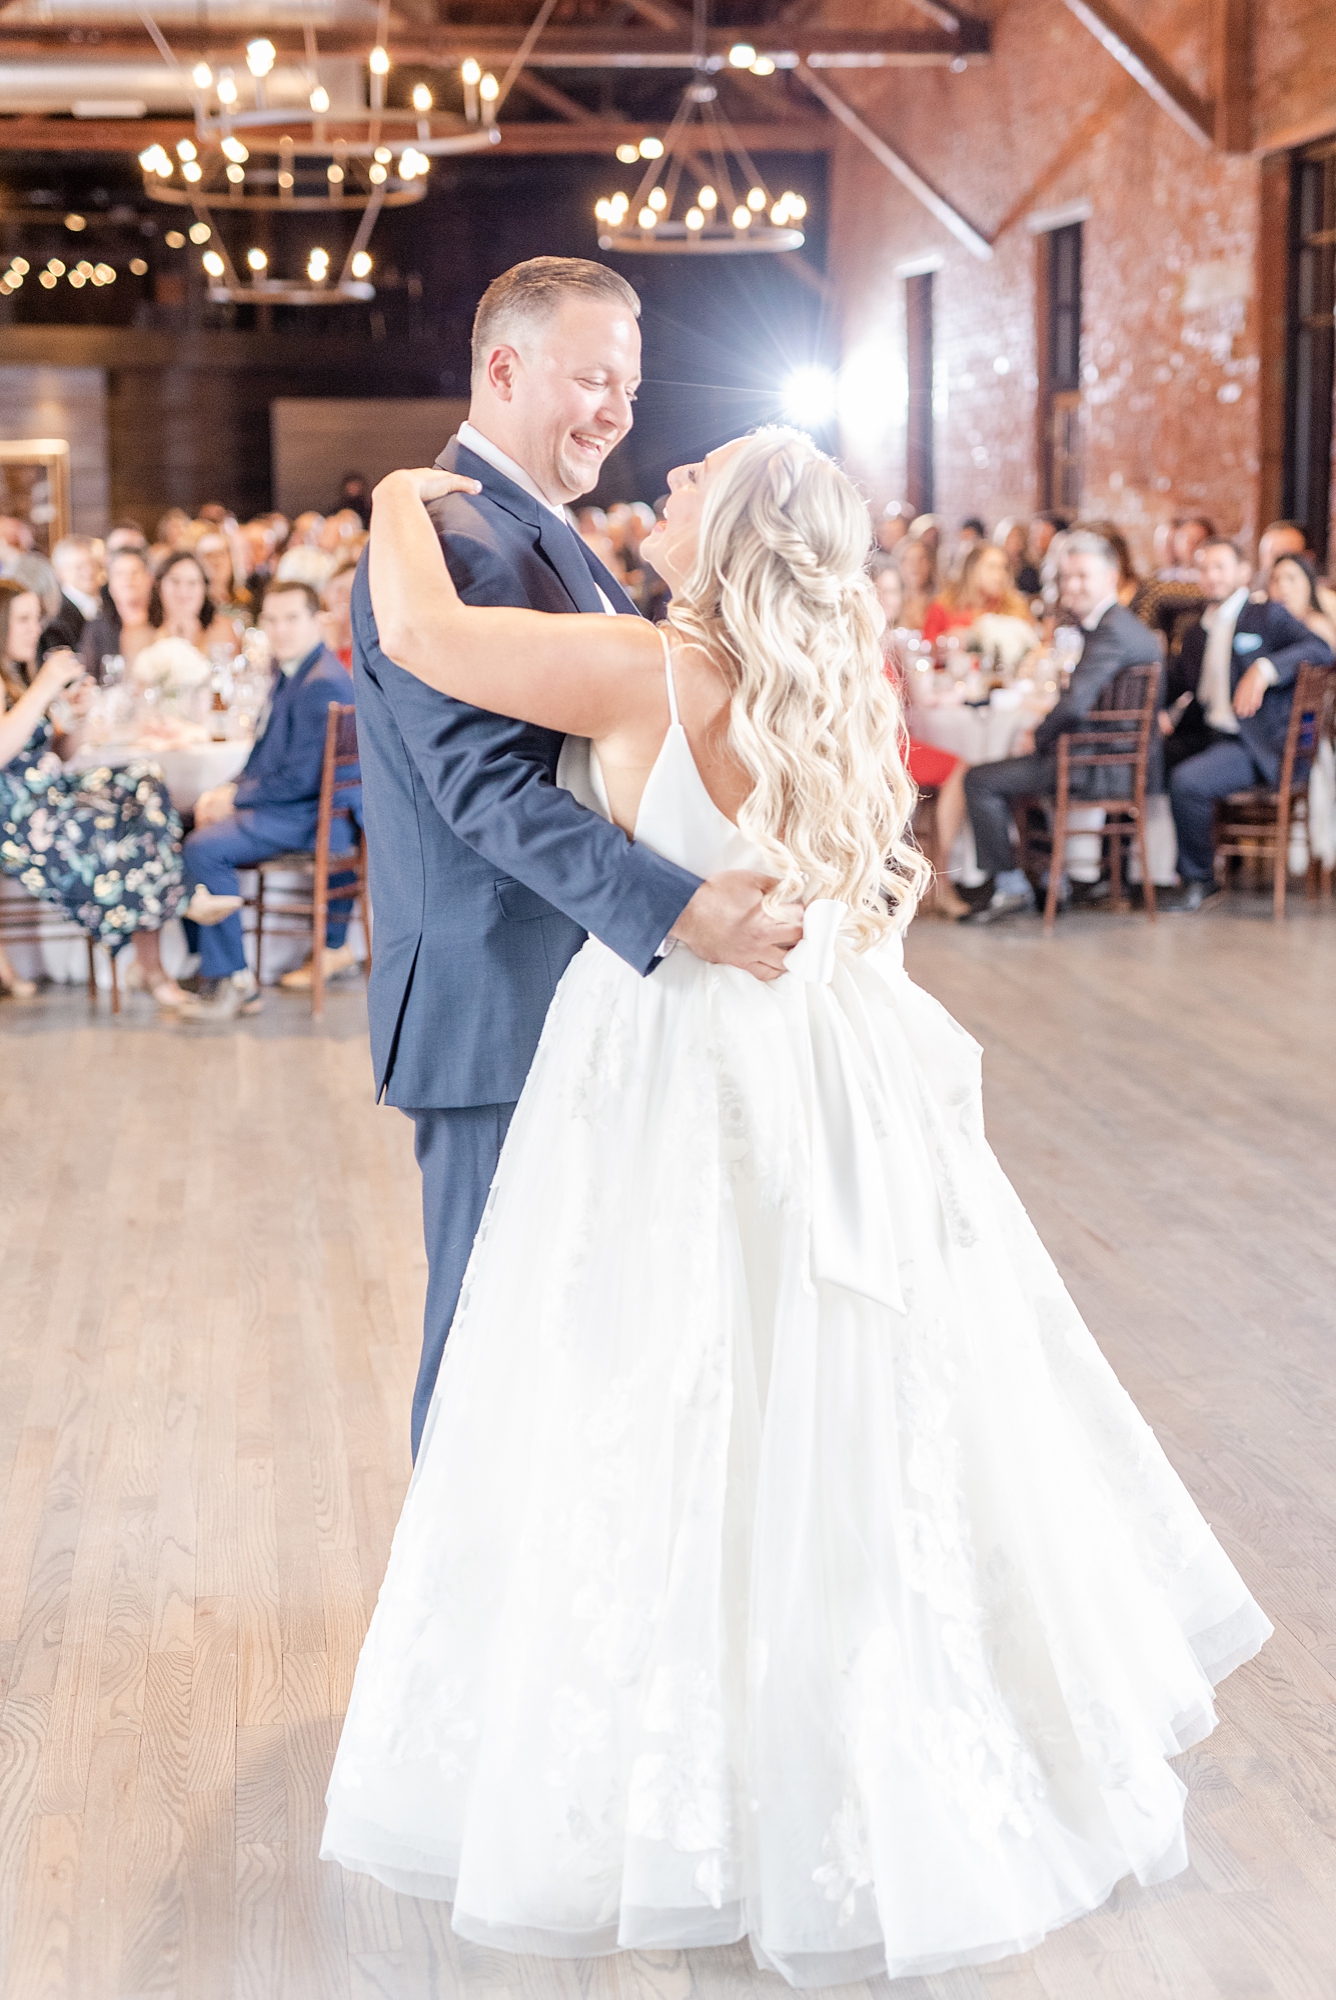 groom dances with bride during Ohio wedding reception